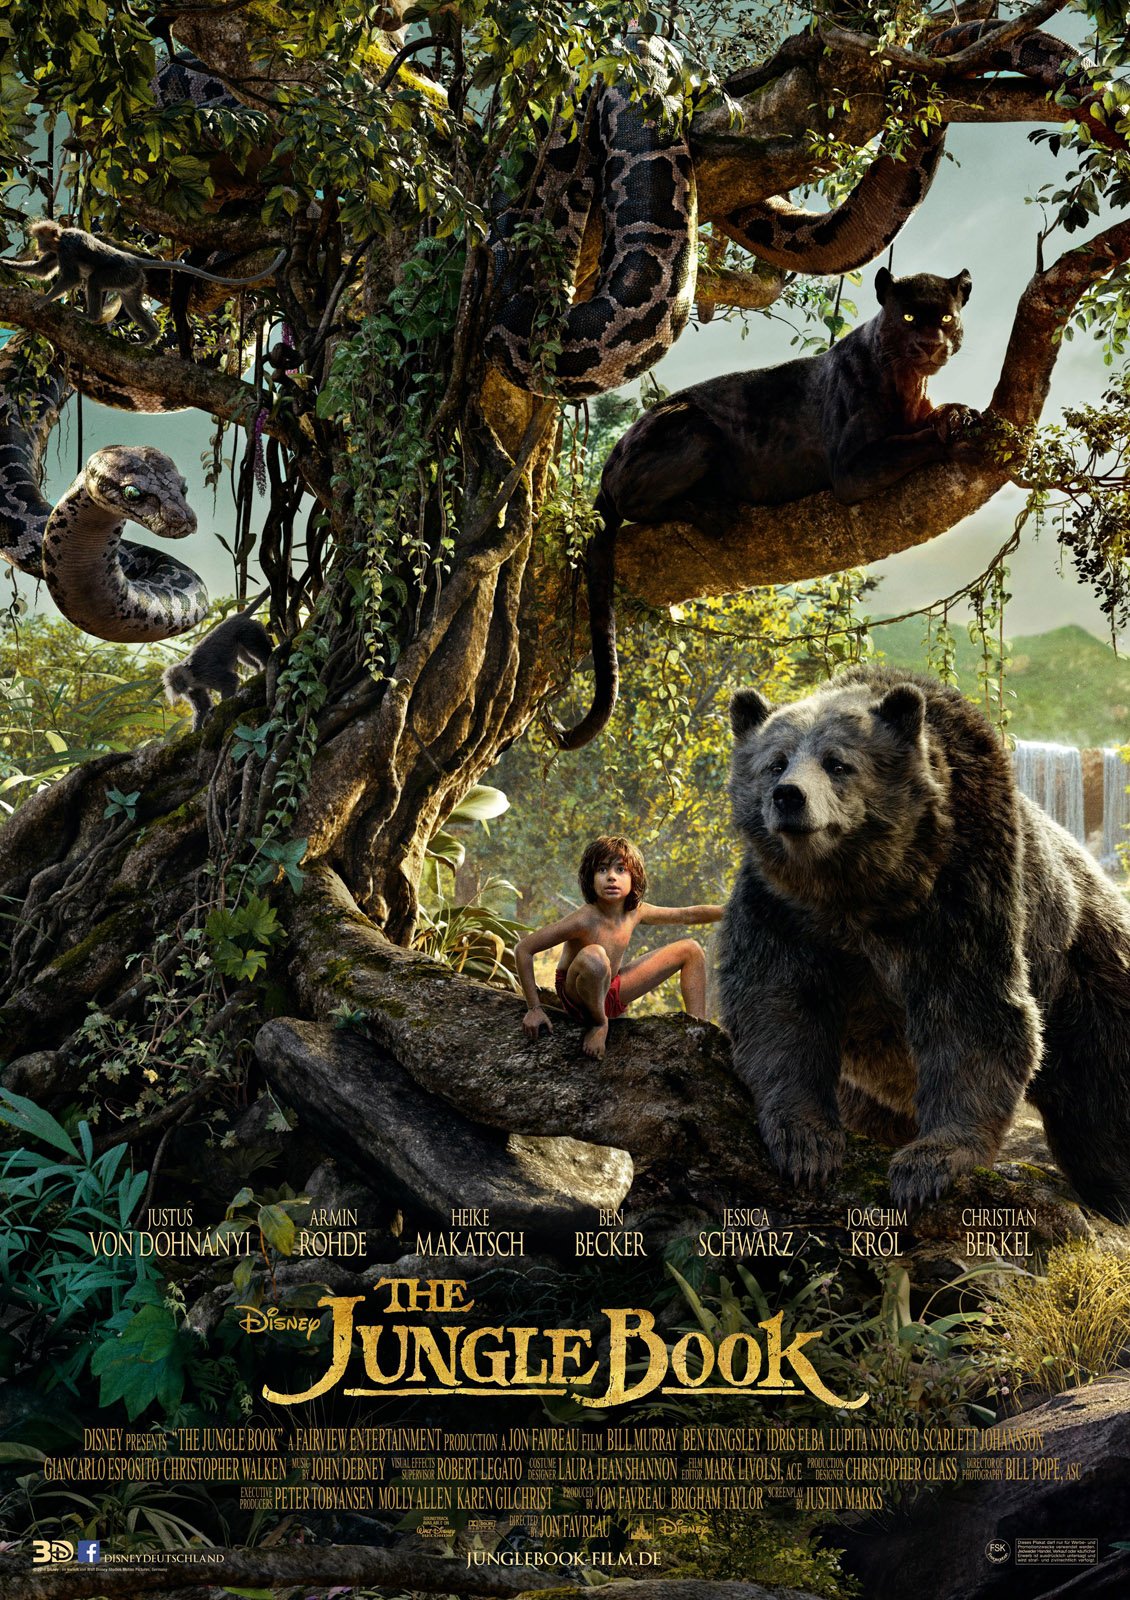 the latest jungle book movie